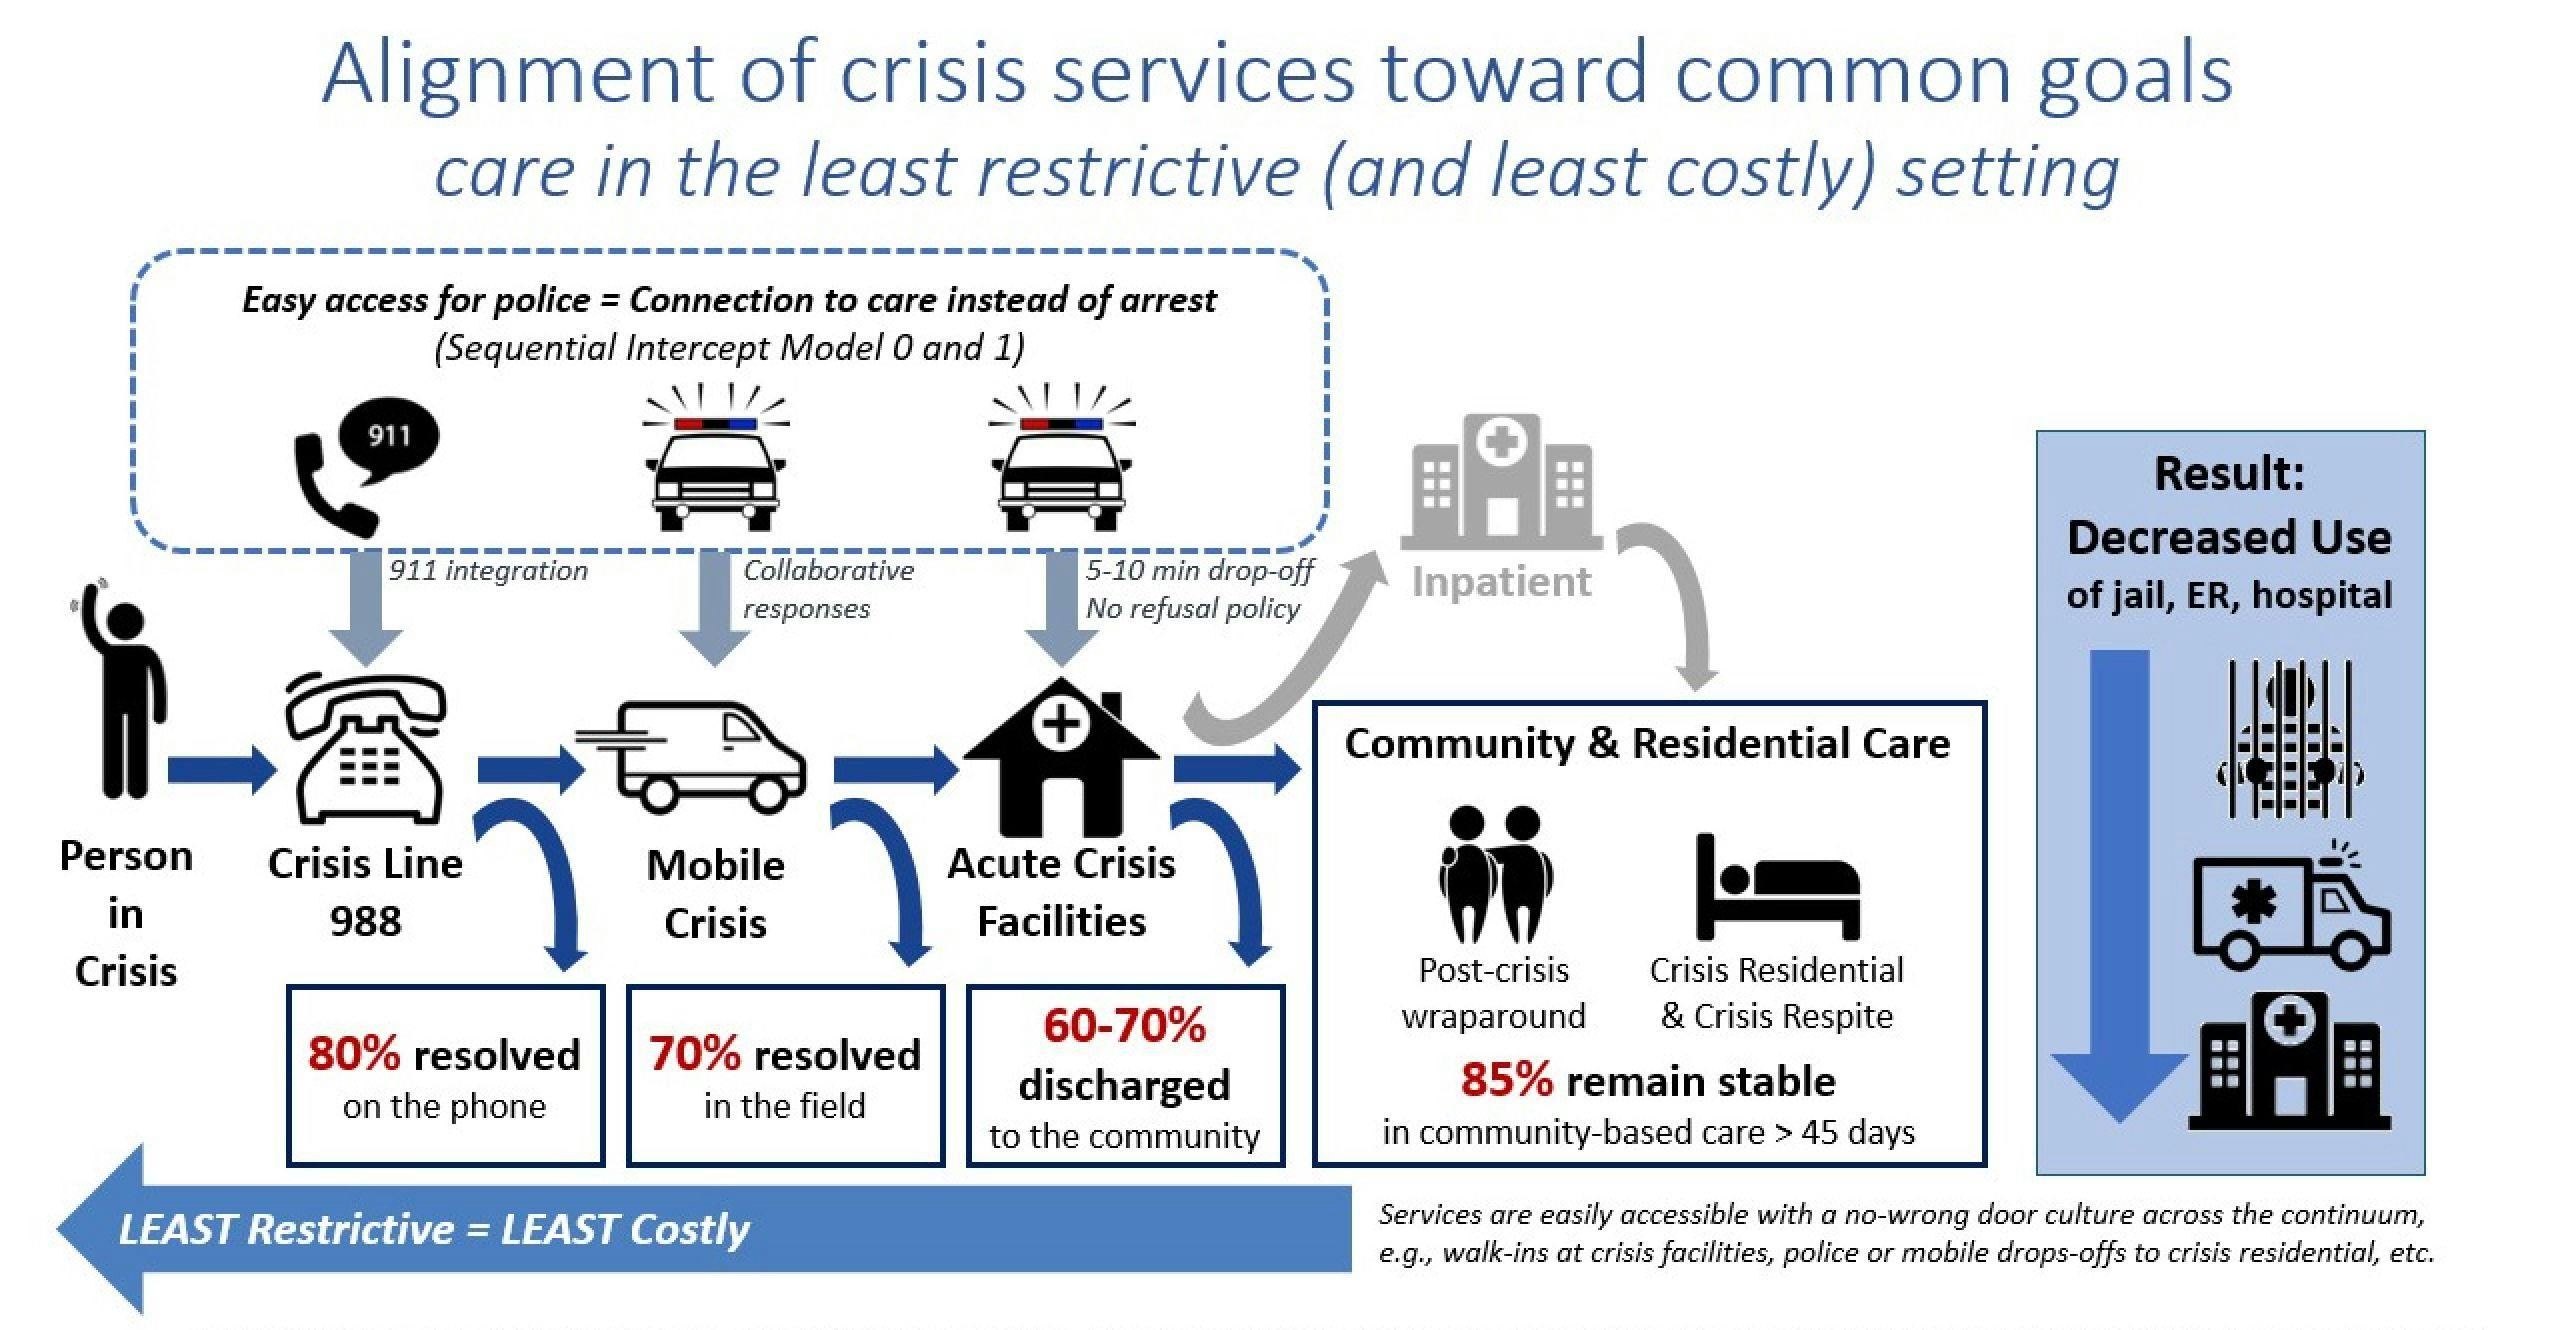 Figure 2. Alignment of Crisis Services Toward Common Goals